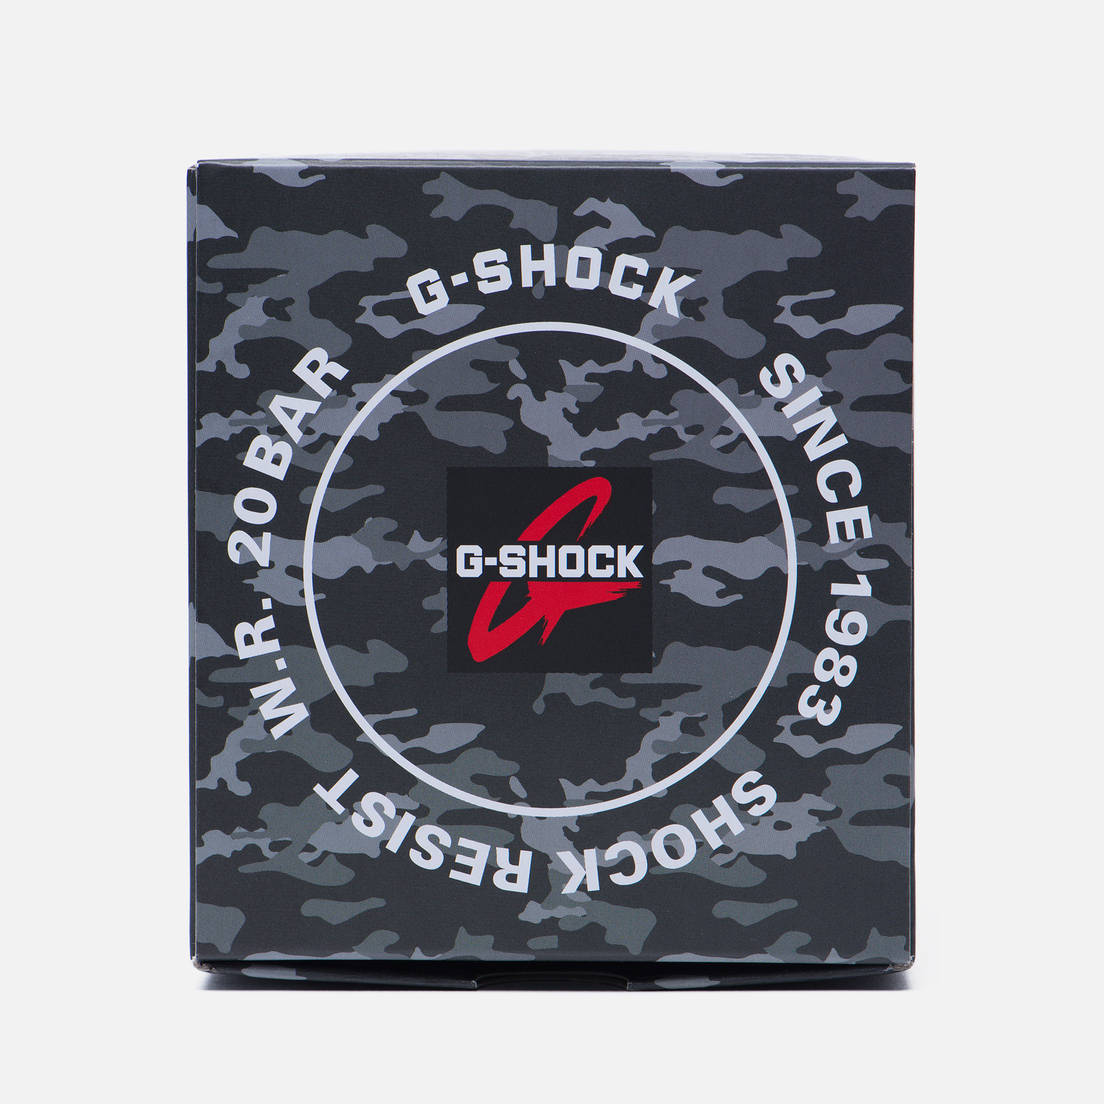 CASIO Наручные часы G-SHOCK GA-100MM-3A